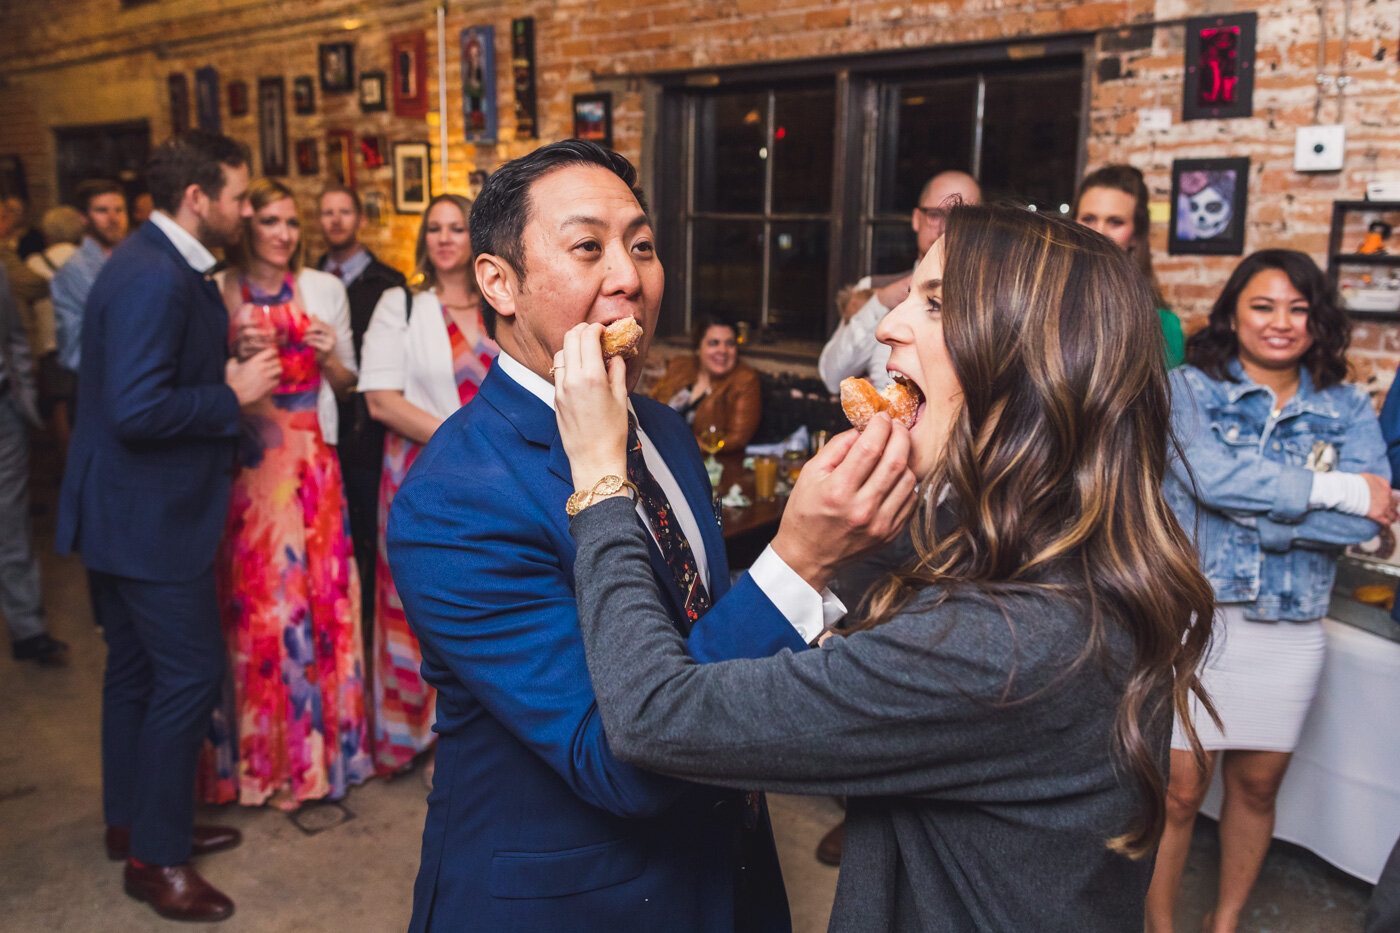 eating-wedding-donuts-together